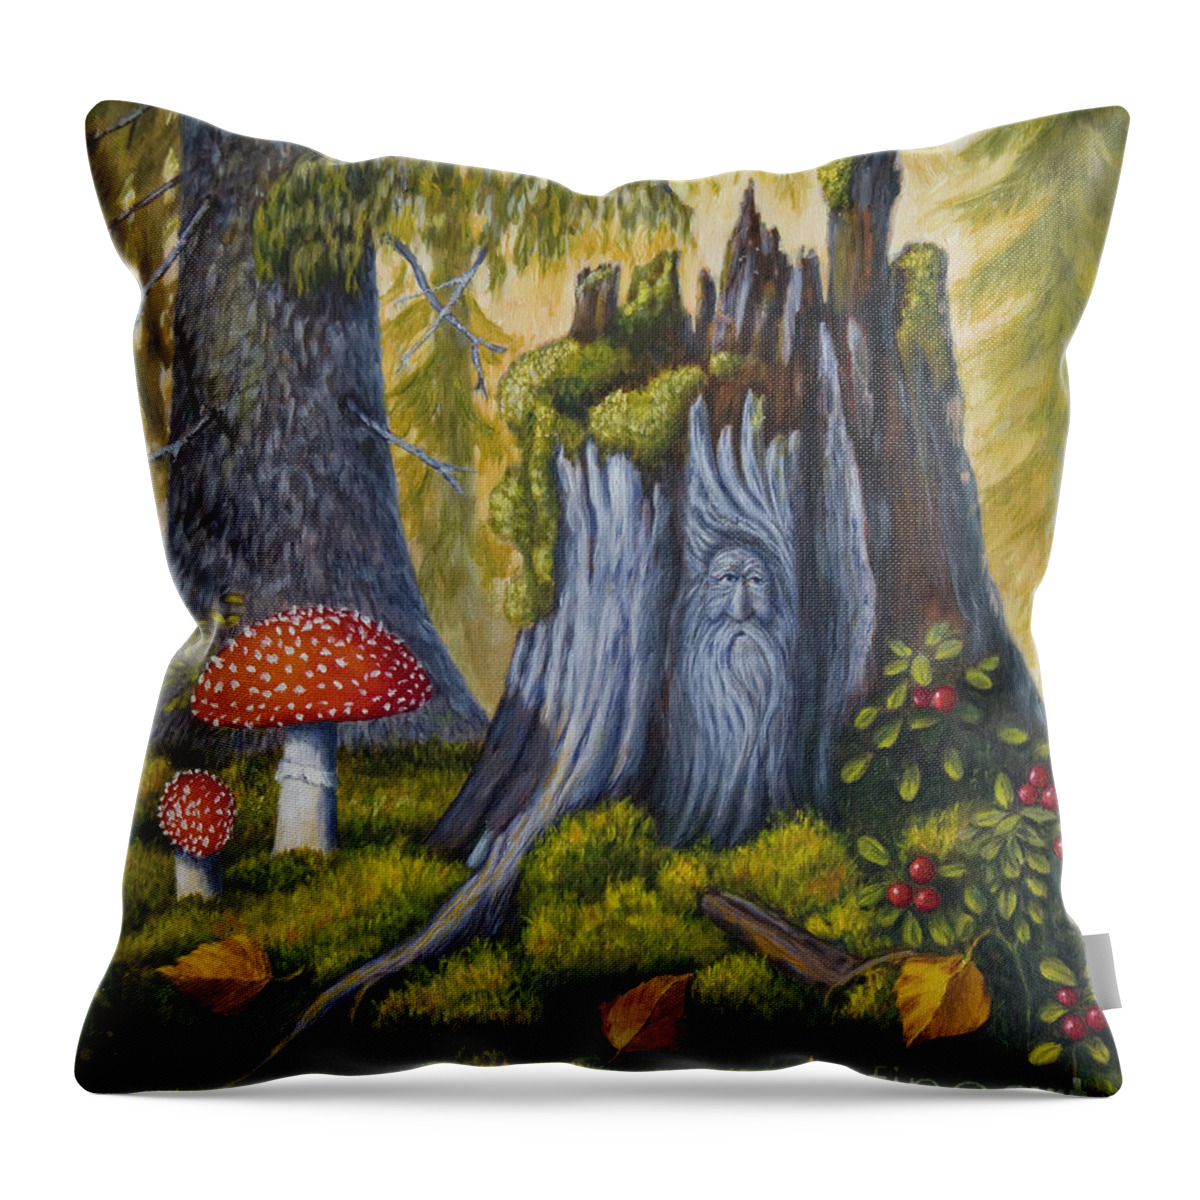 Art Throw Pillow featuring the painting Spirit of the forest by Veikko Suikkanen